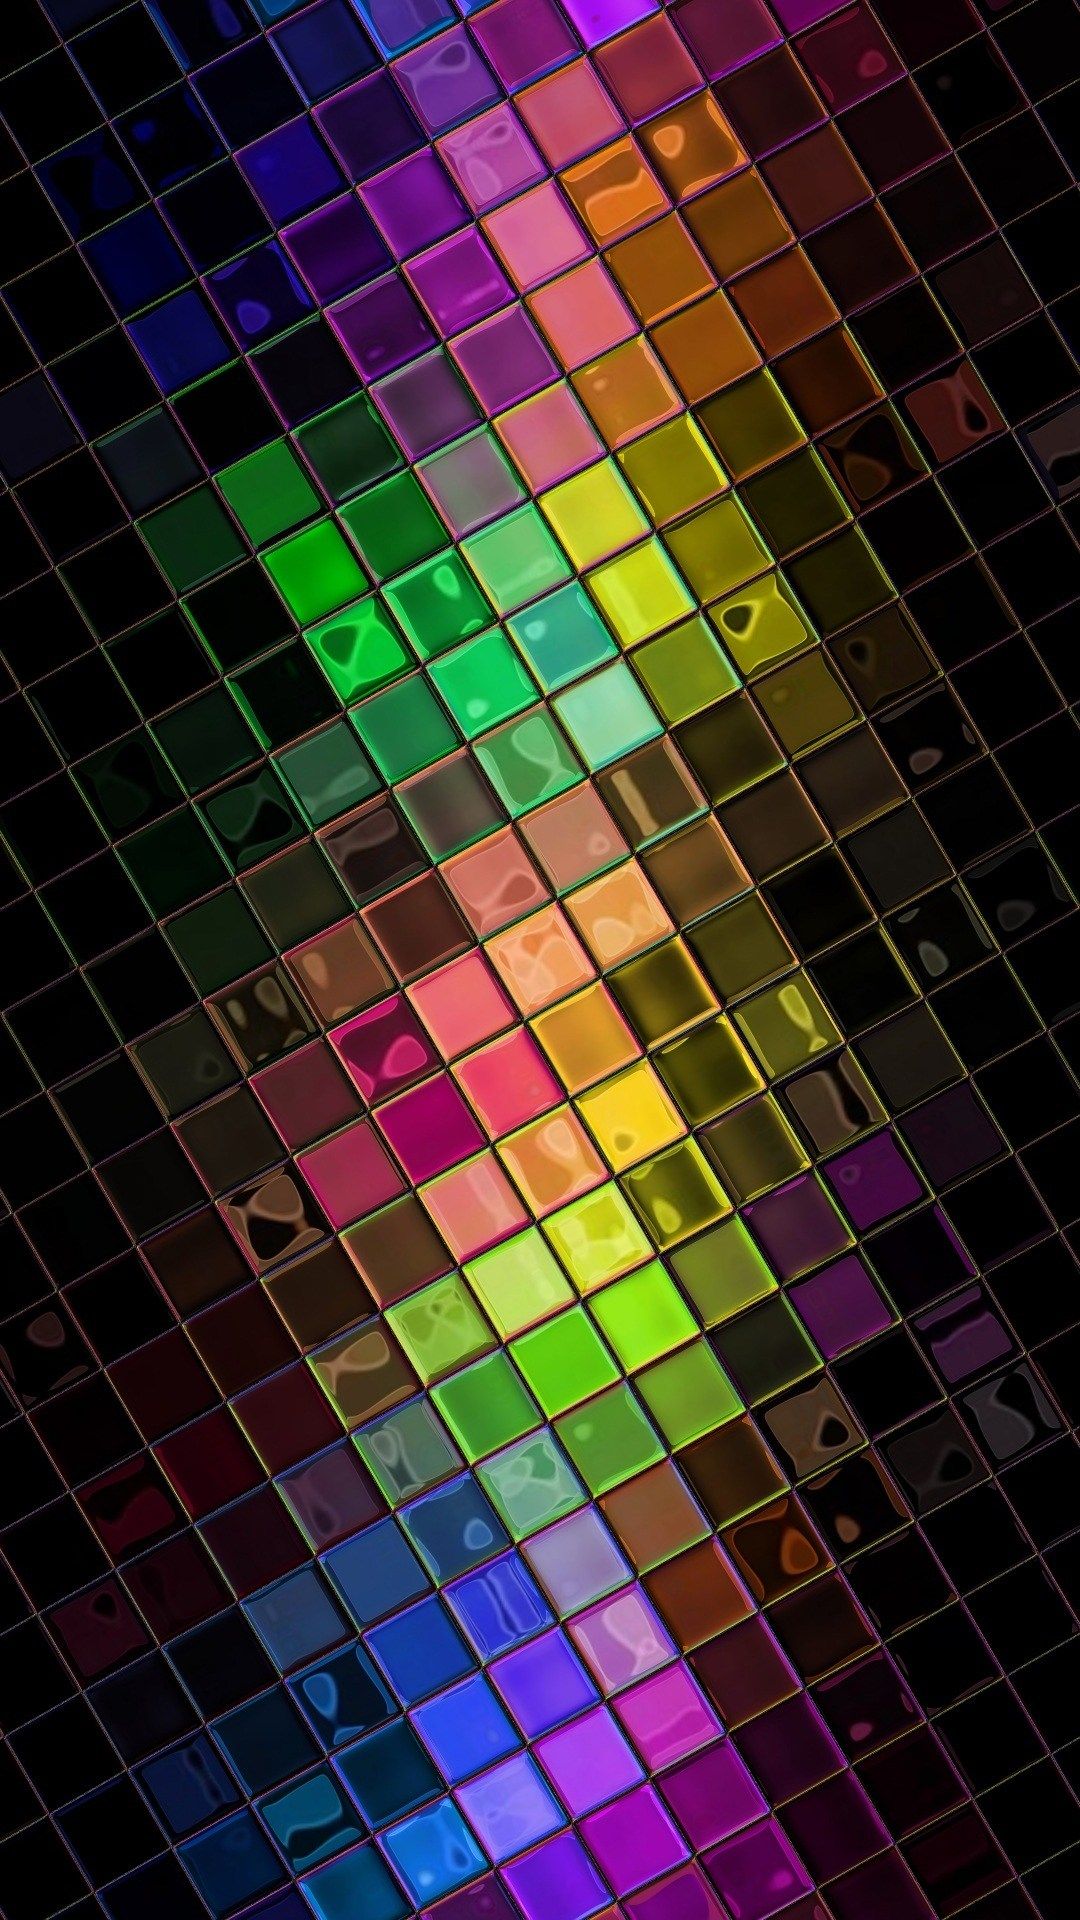 iWallpaper squares in HD wallpaper. iPad and iPhone wallpaper